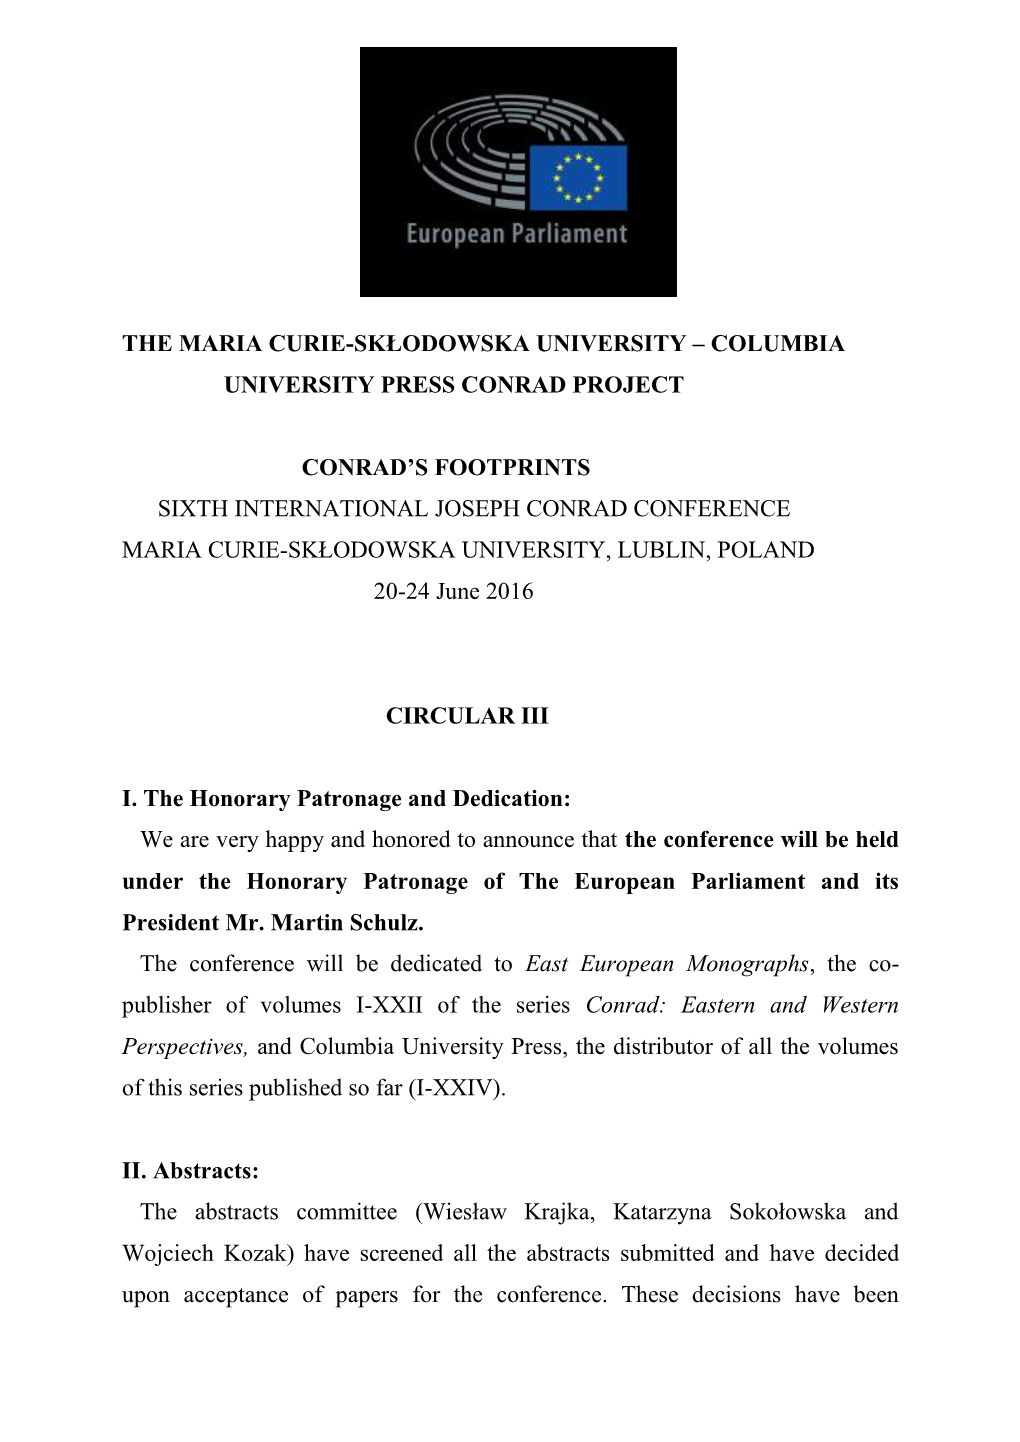 The Maria Curie-Skłodowska University – Columbia University Press Conrad Project